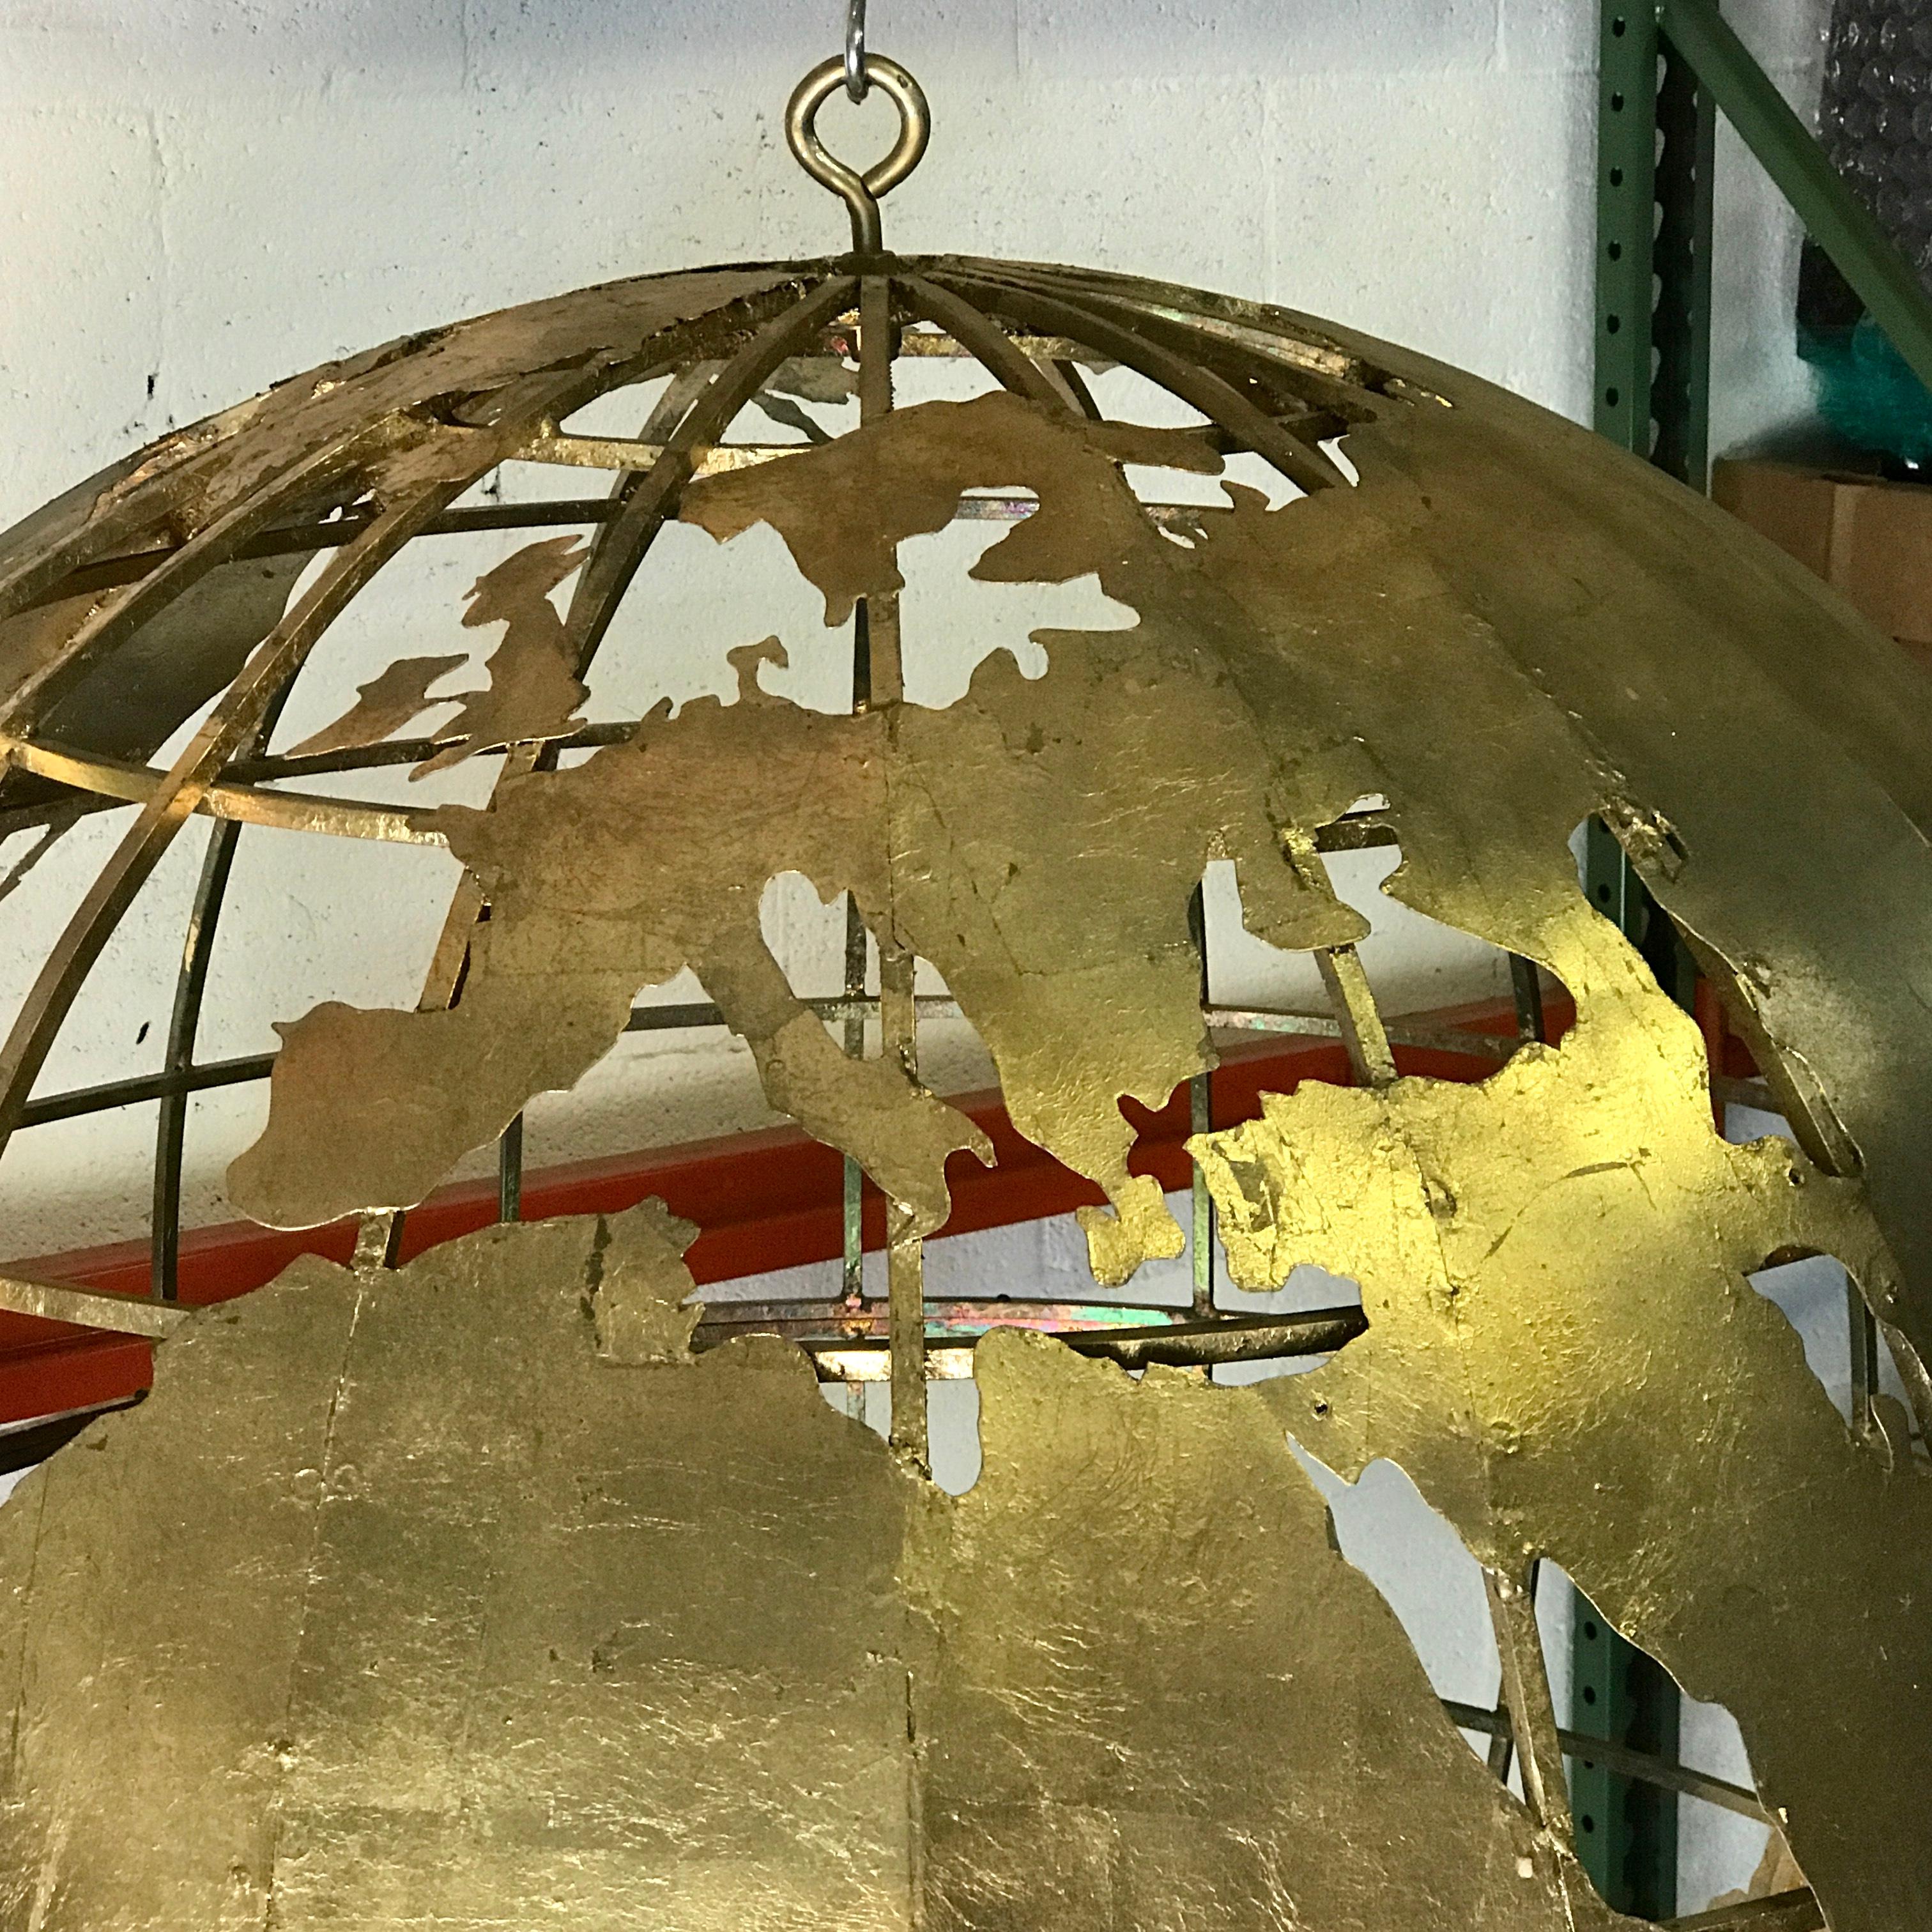 giant metal globes